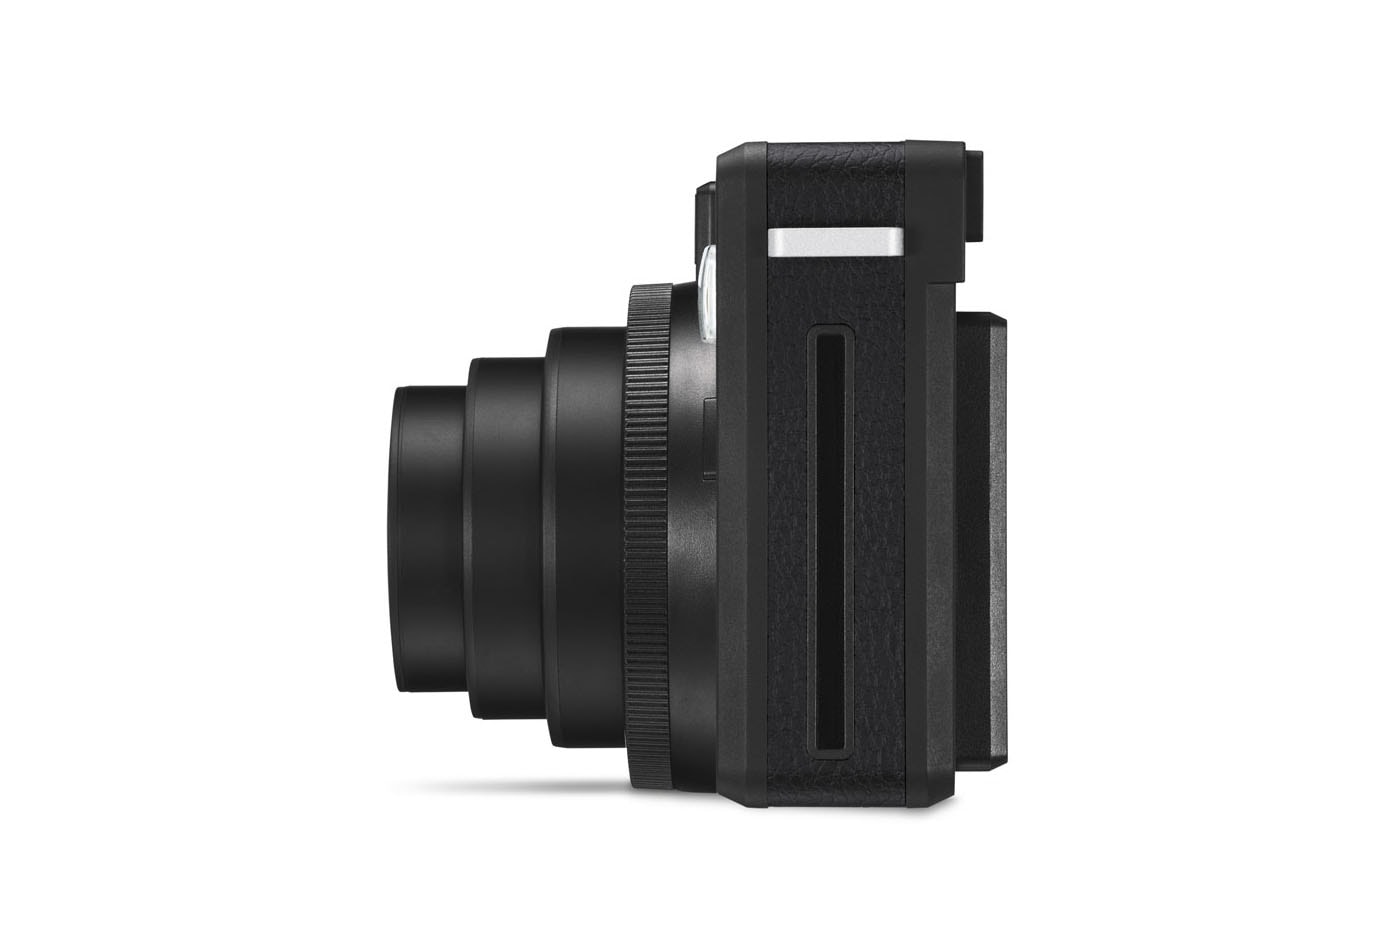 Leica 拍立得相機 SOFORT 迎來全黑配色上架